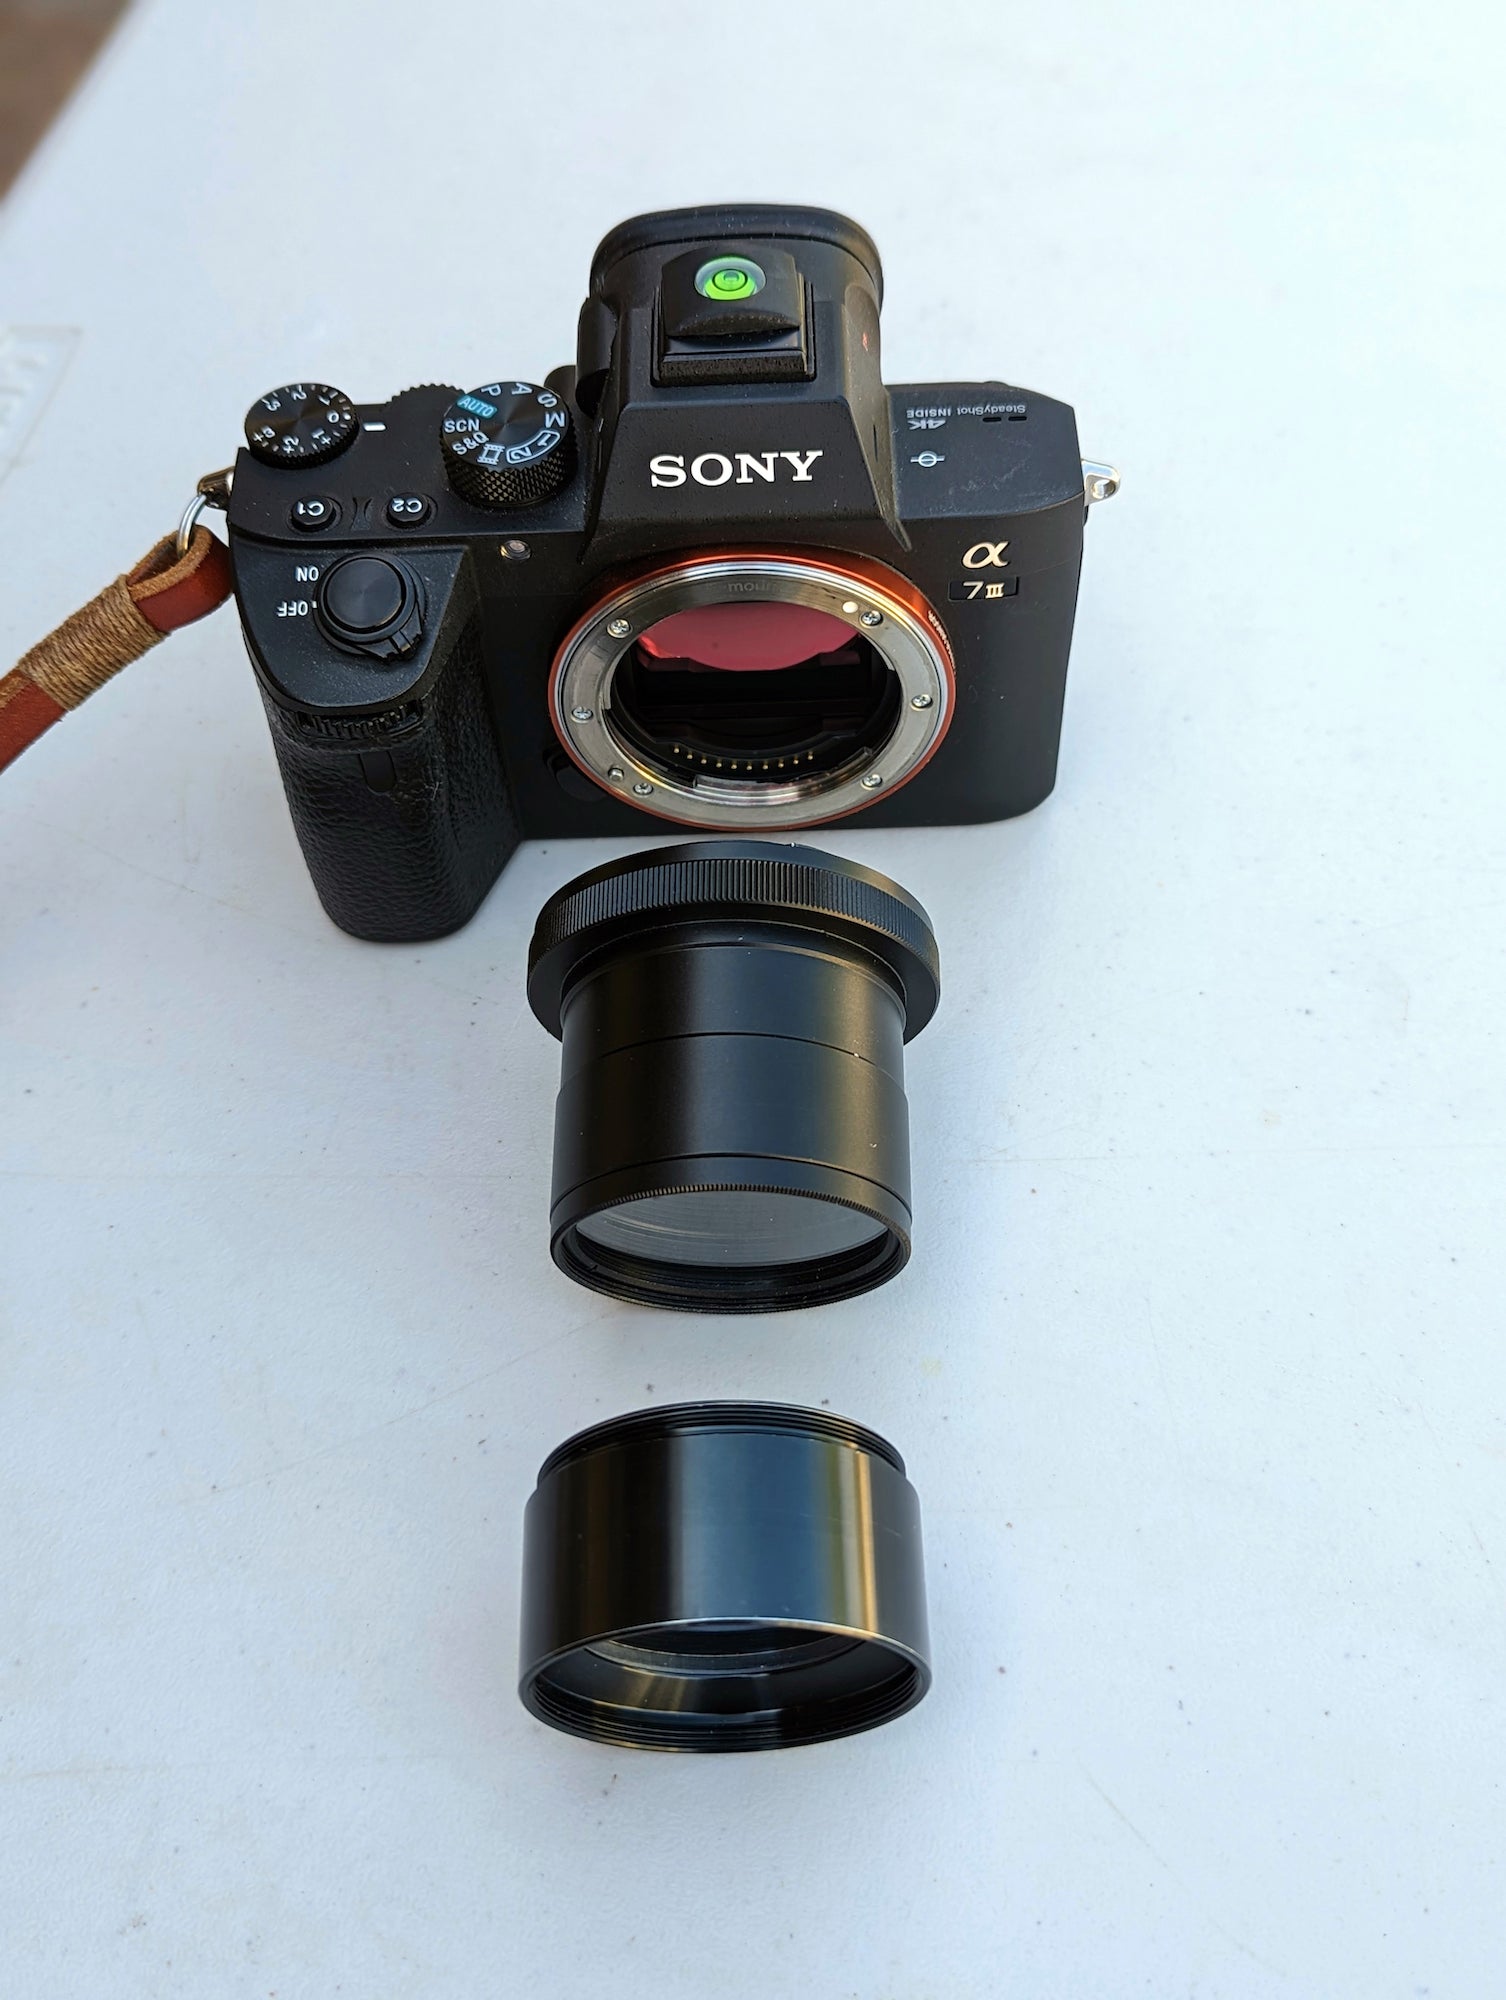 Alan Strauss' solar photography setup including the Sony Alpha 7 III